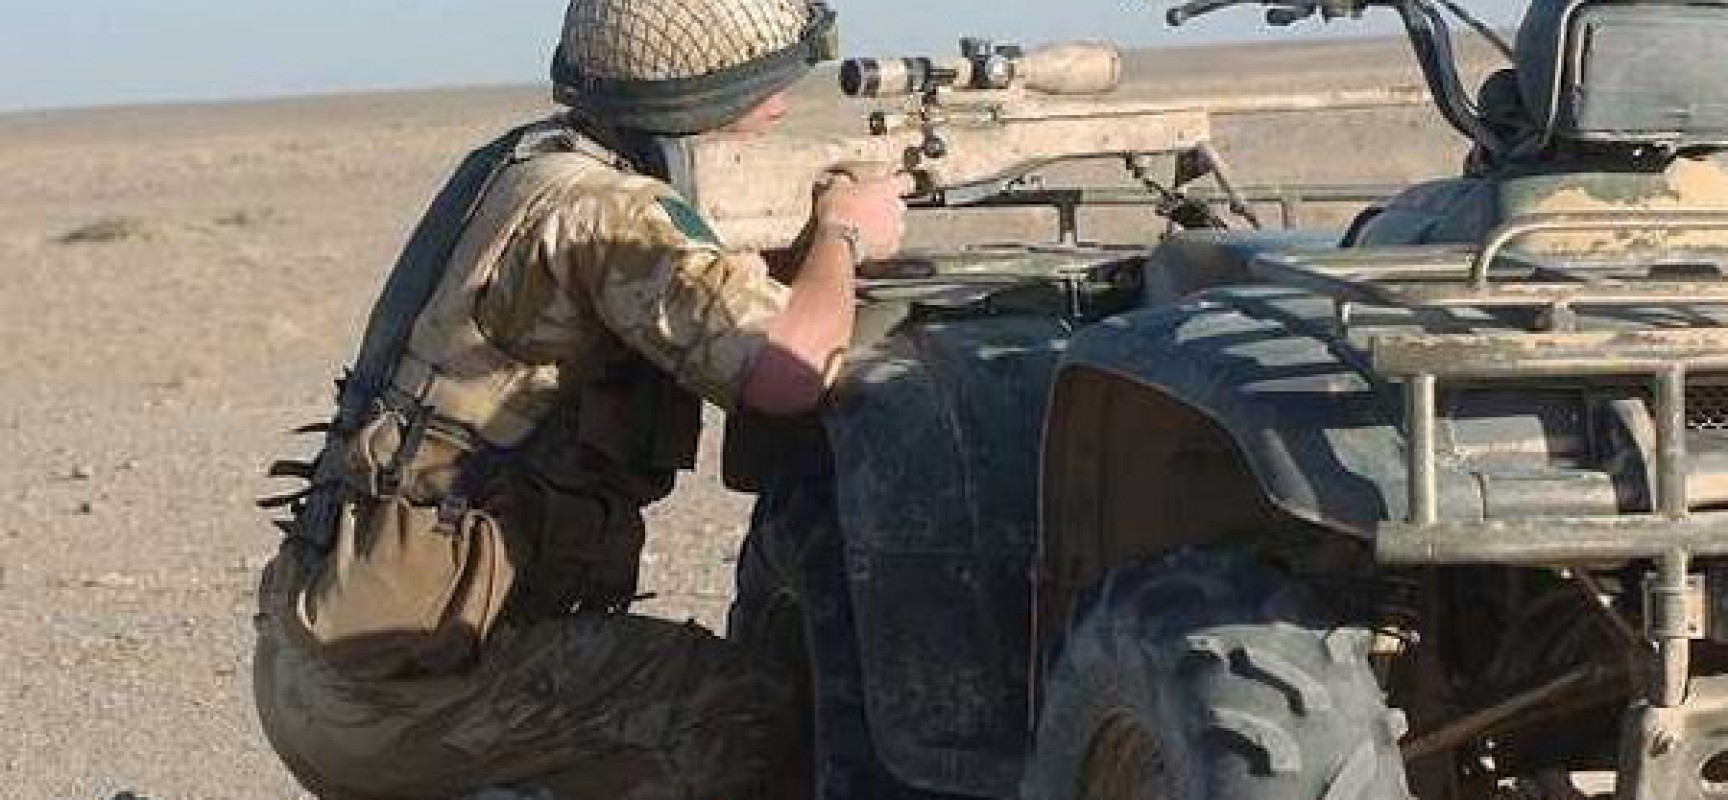 Tensions en Libye - Page 39 British_Special_Forces_B_SAS_Libya_27_594_396-1728x800_c